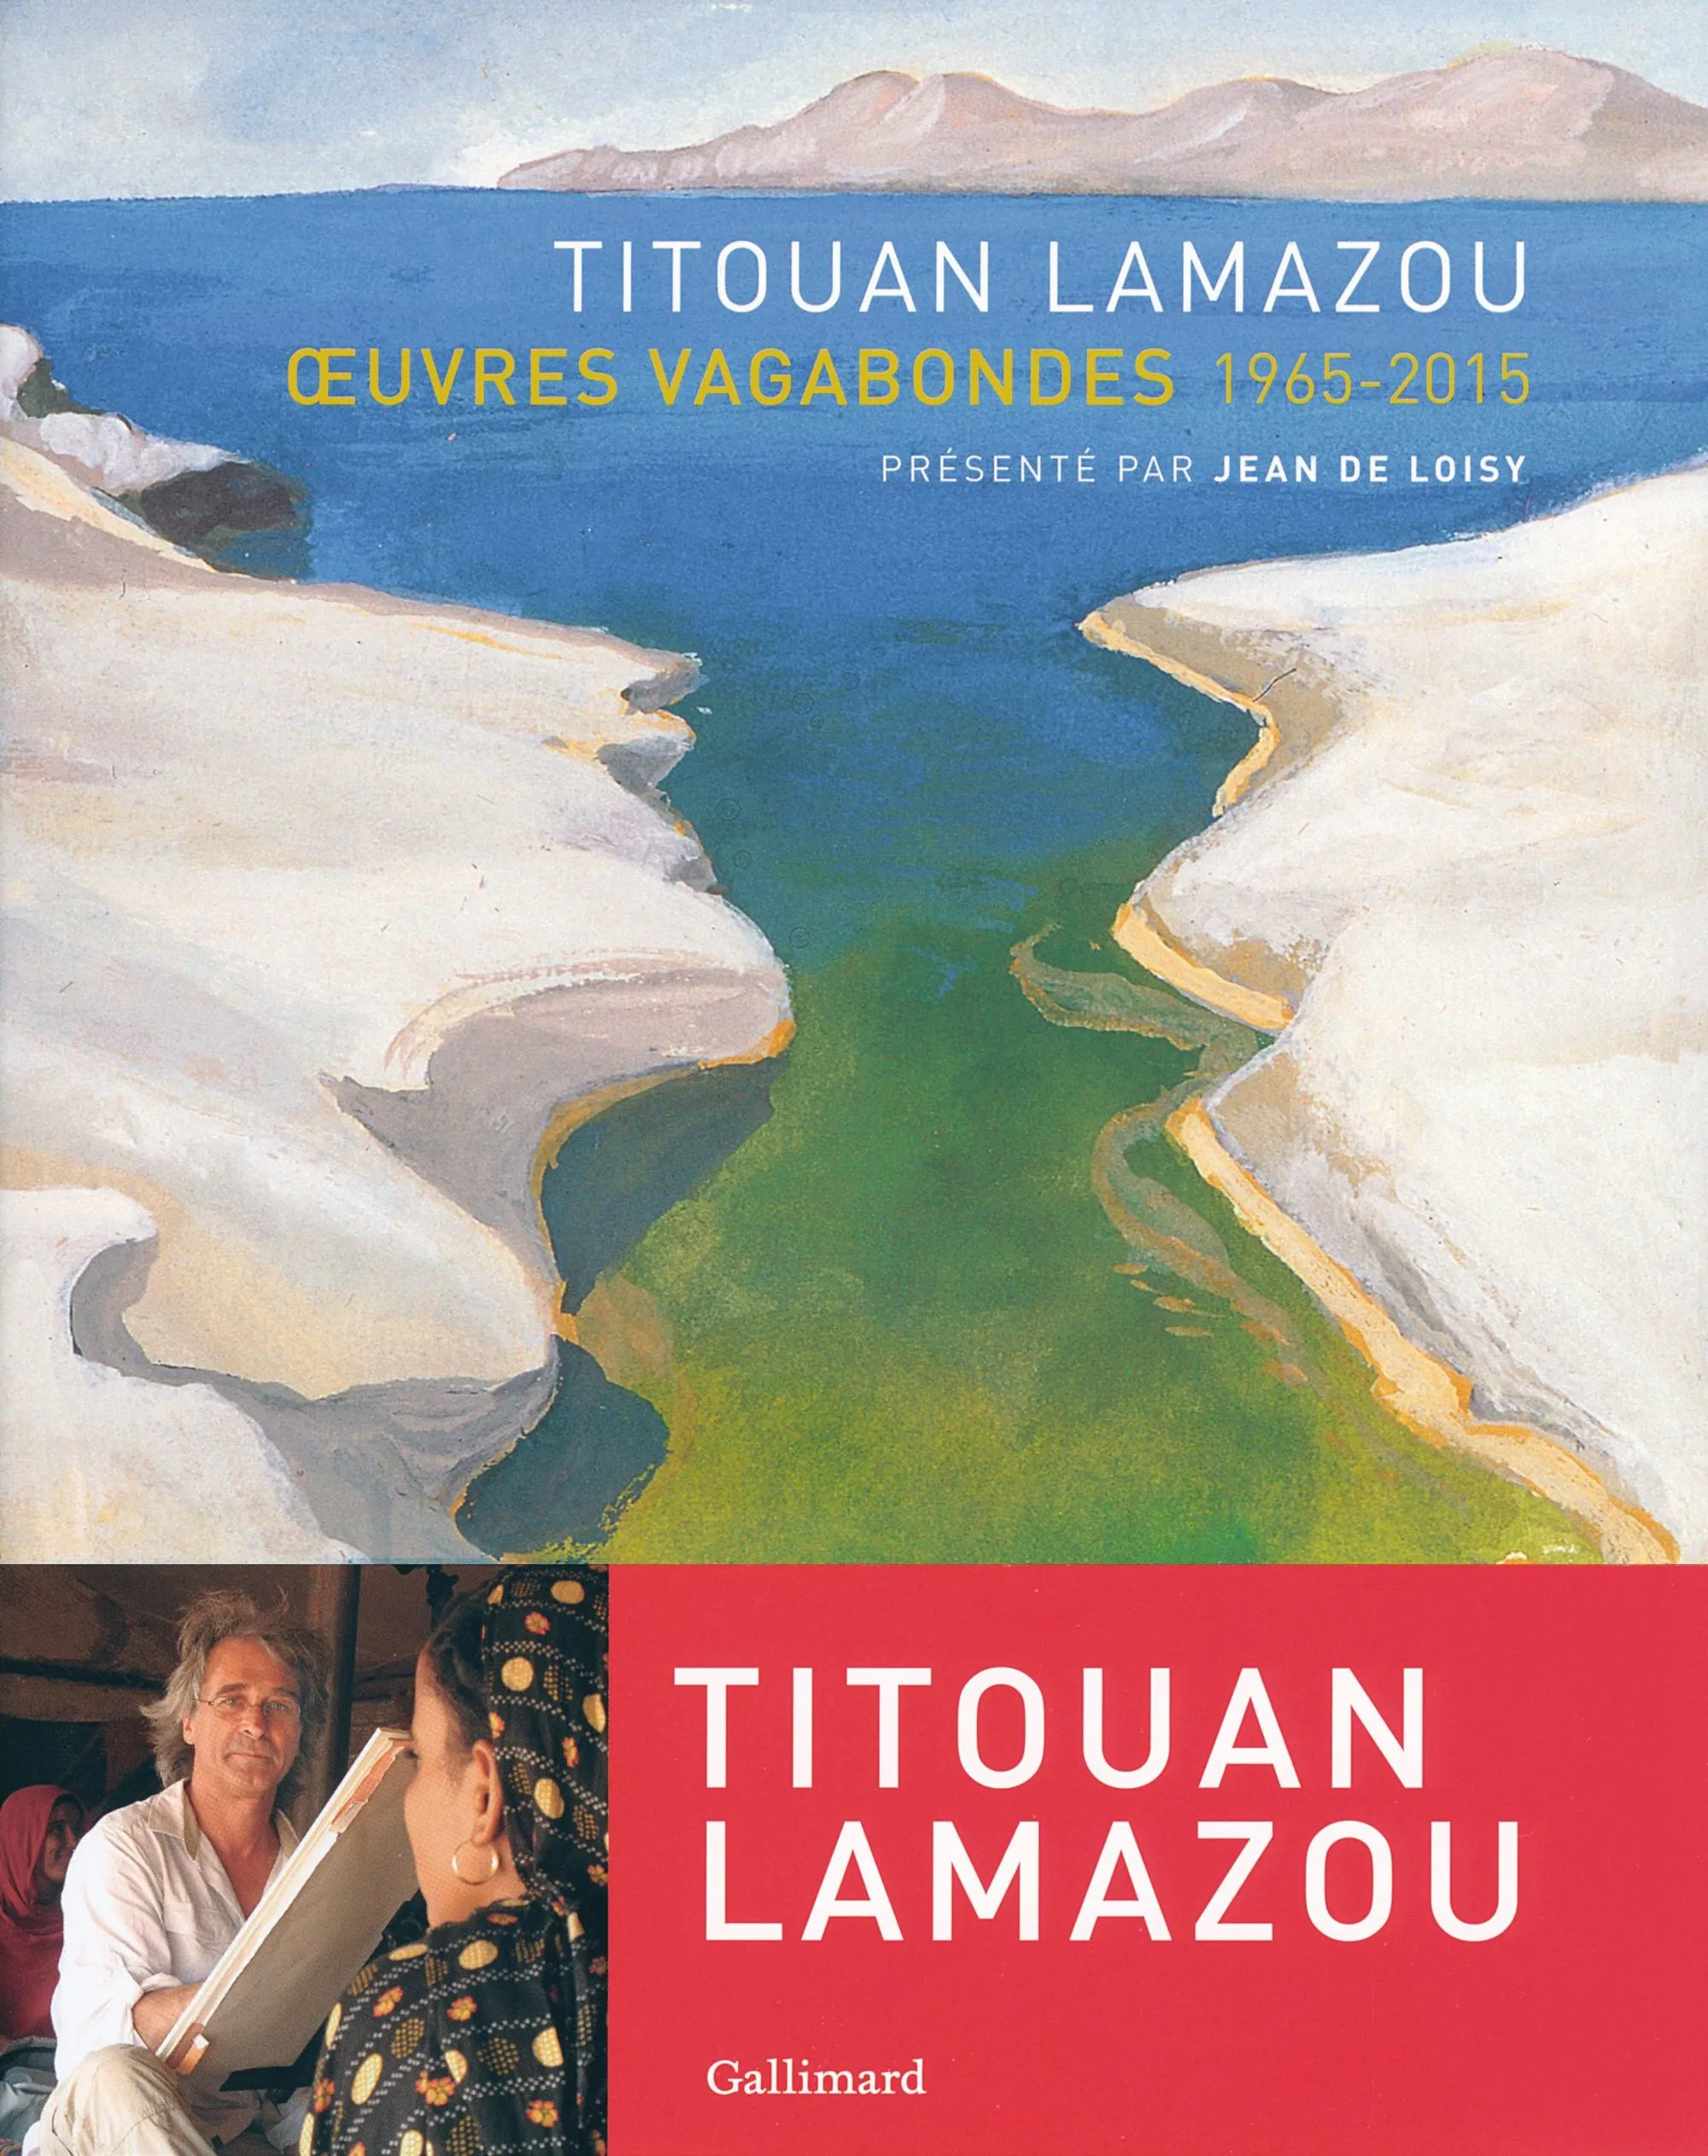 Titouan Lamazou, Œuvres vagabondes, 2016, Gallimard Loisirs.